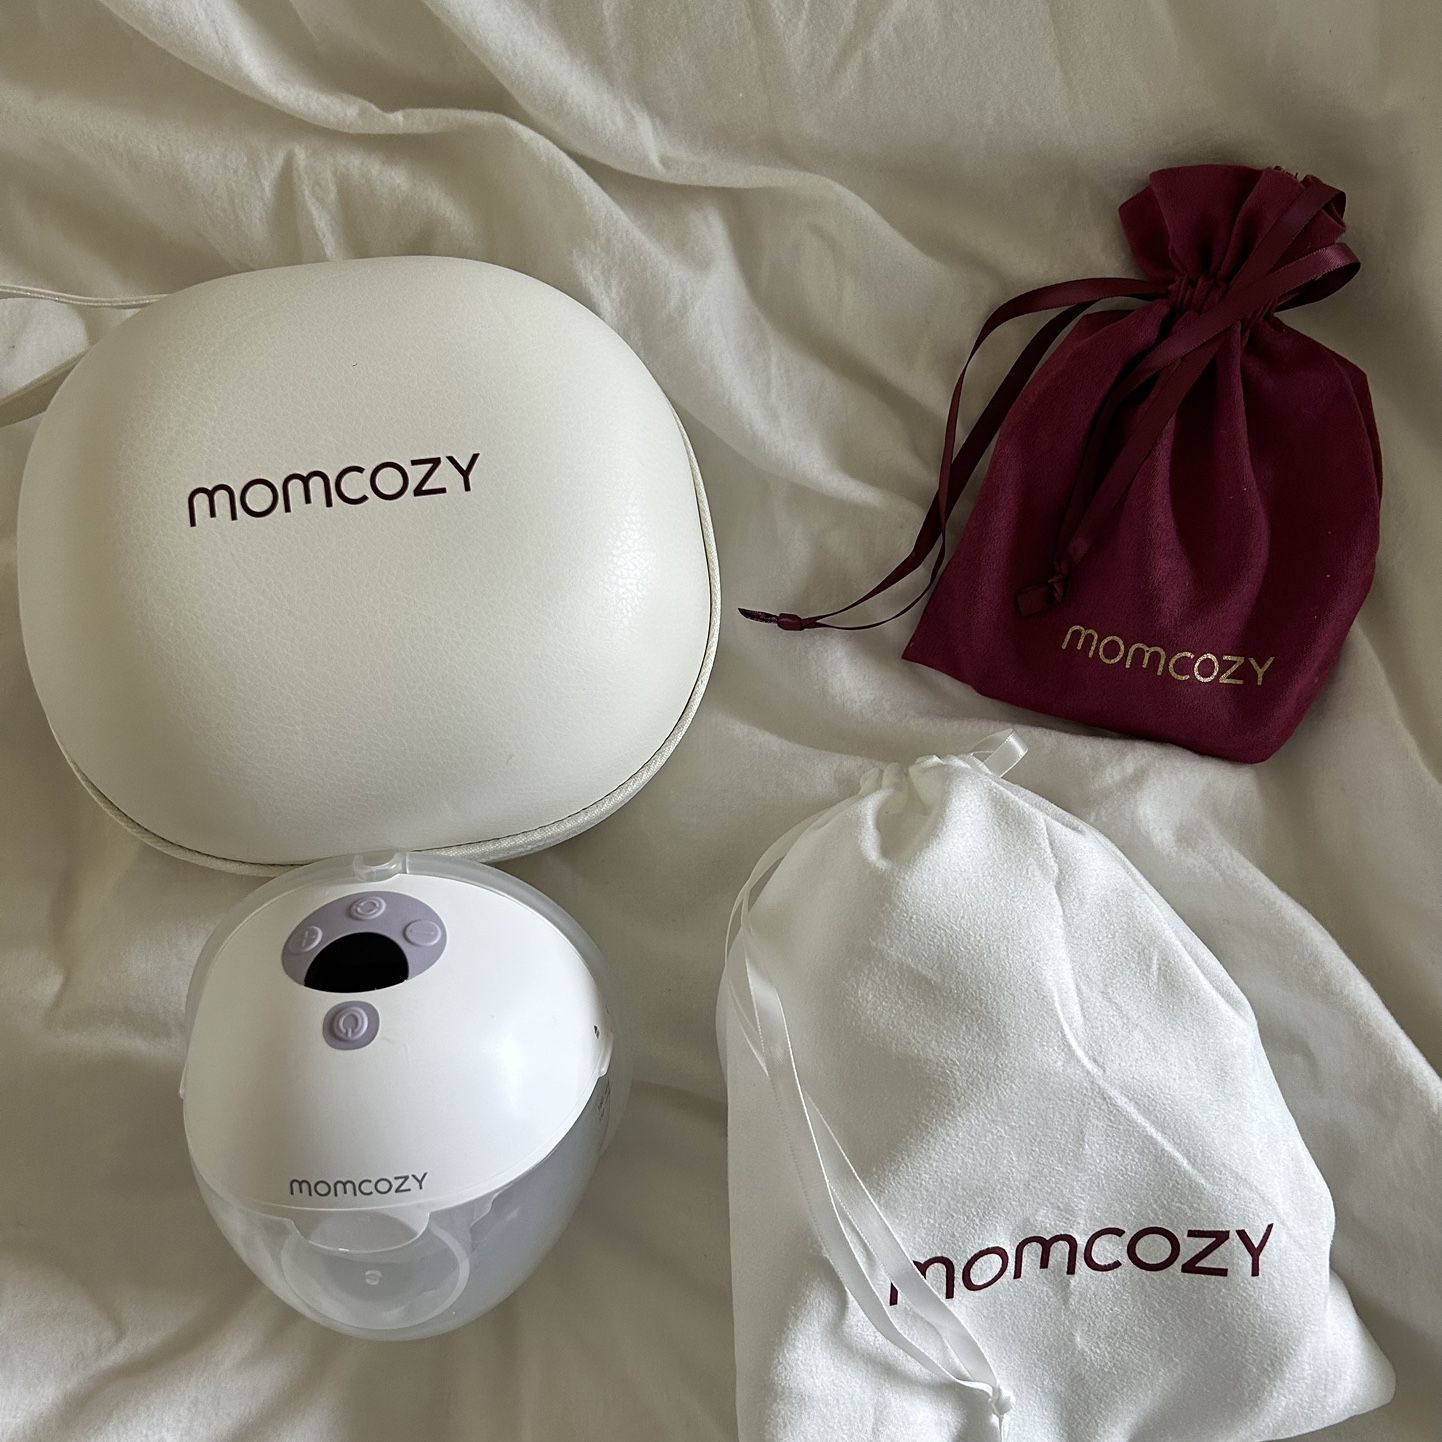 Momcozy Breast Milk Storage Bags for Sale in Mesa, AZ - OfferUp